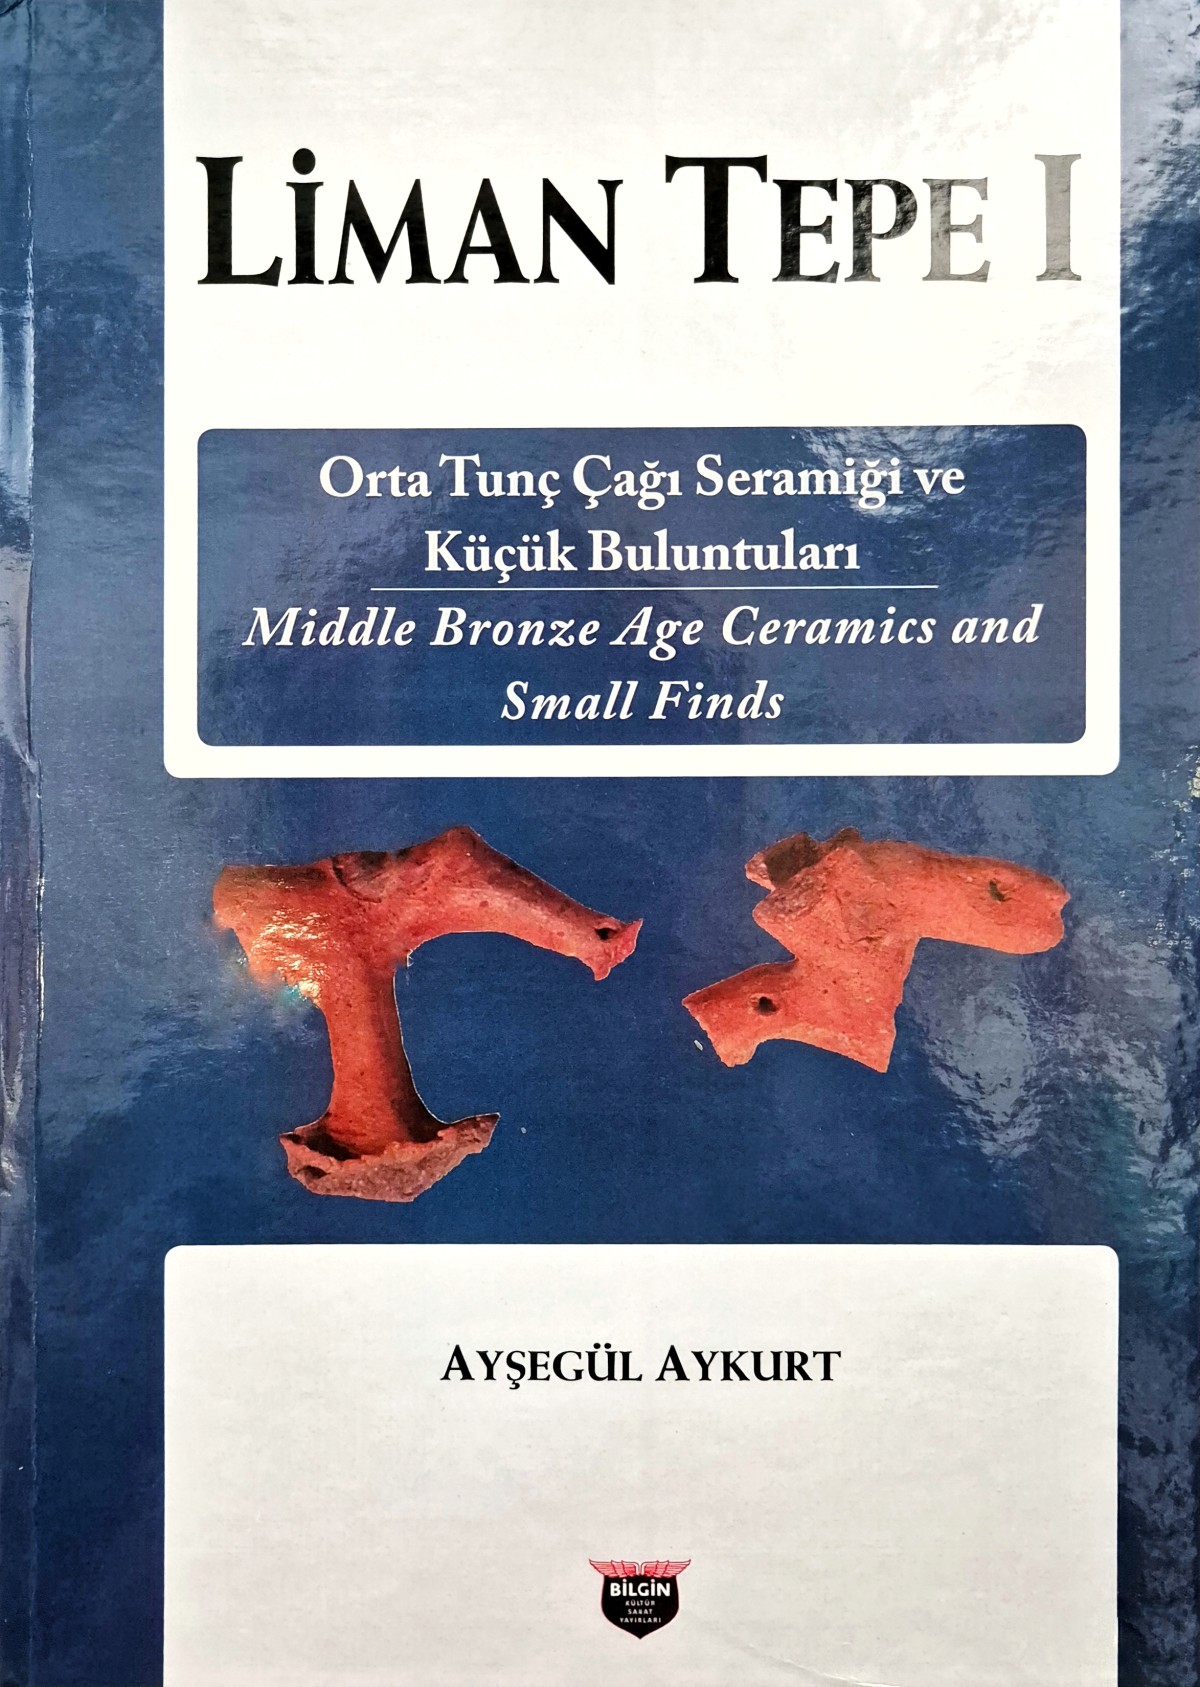 Aykurt, Ayşegül : Liman Tepe I - Middle Bronze Age Ceramics and Small Finds / Orta Tunç Çağı Seramiği ve Küçük Buluntuları 